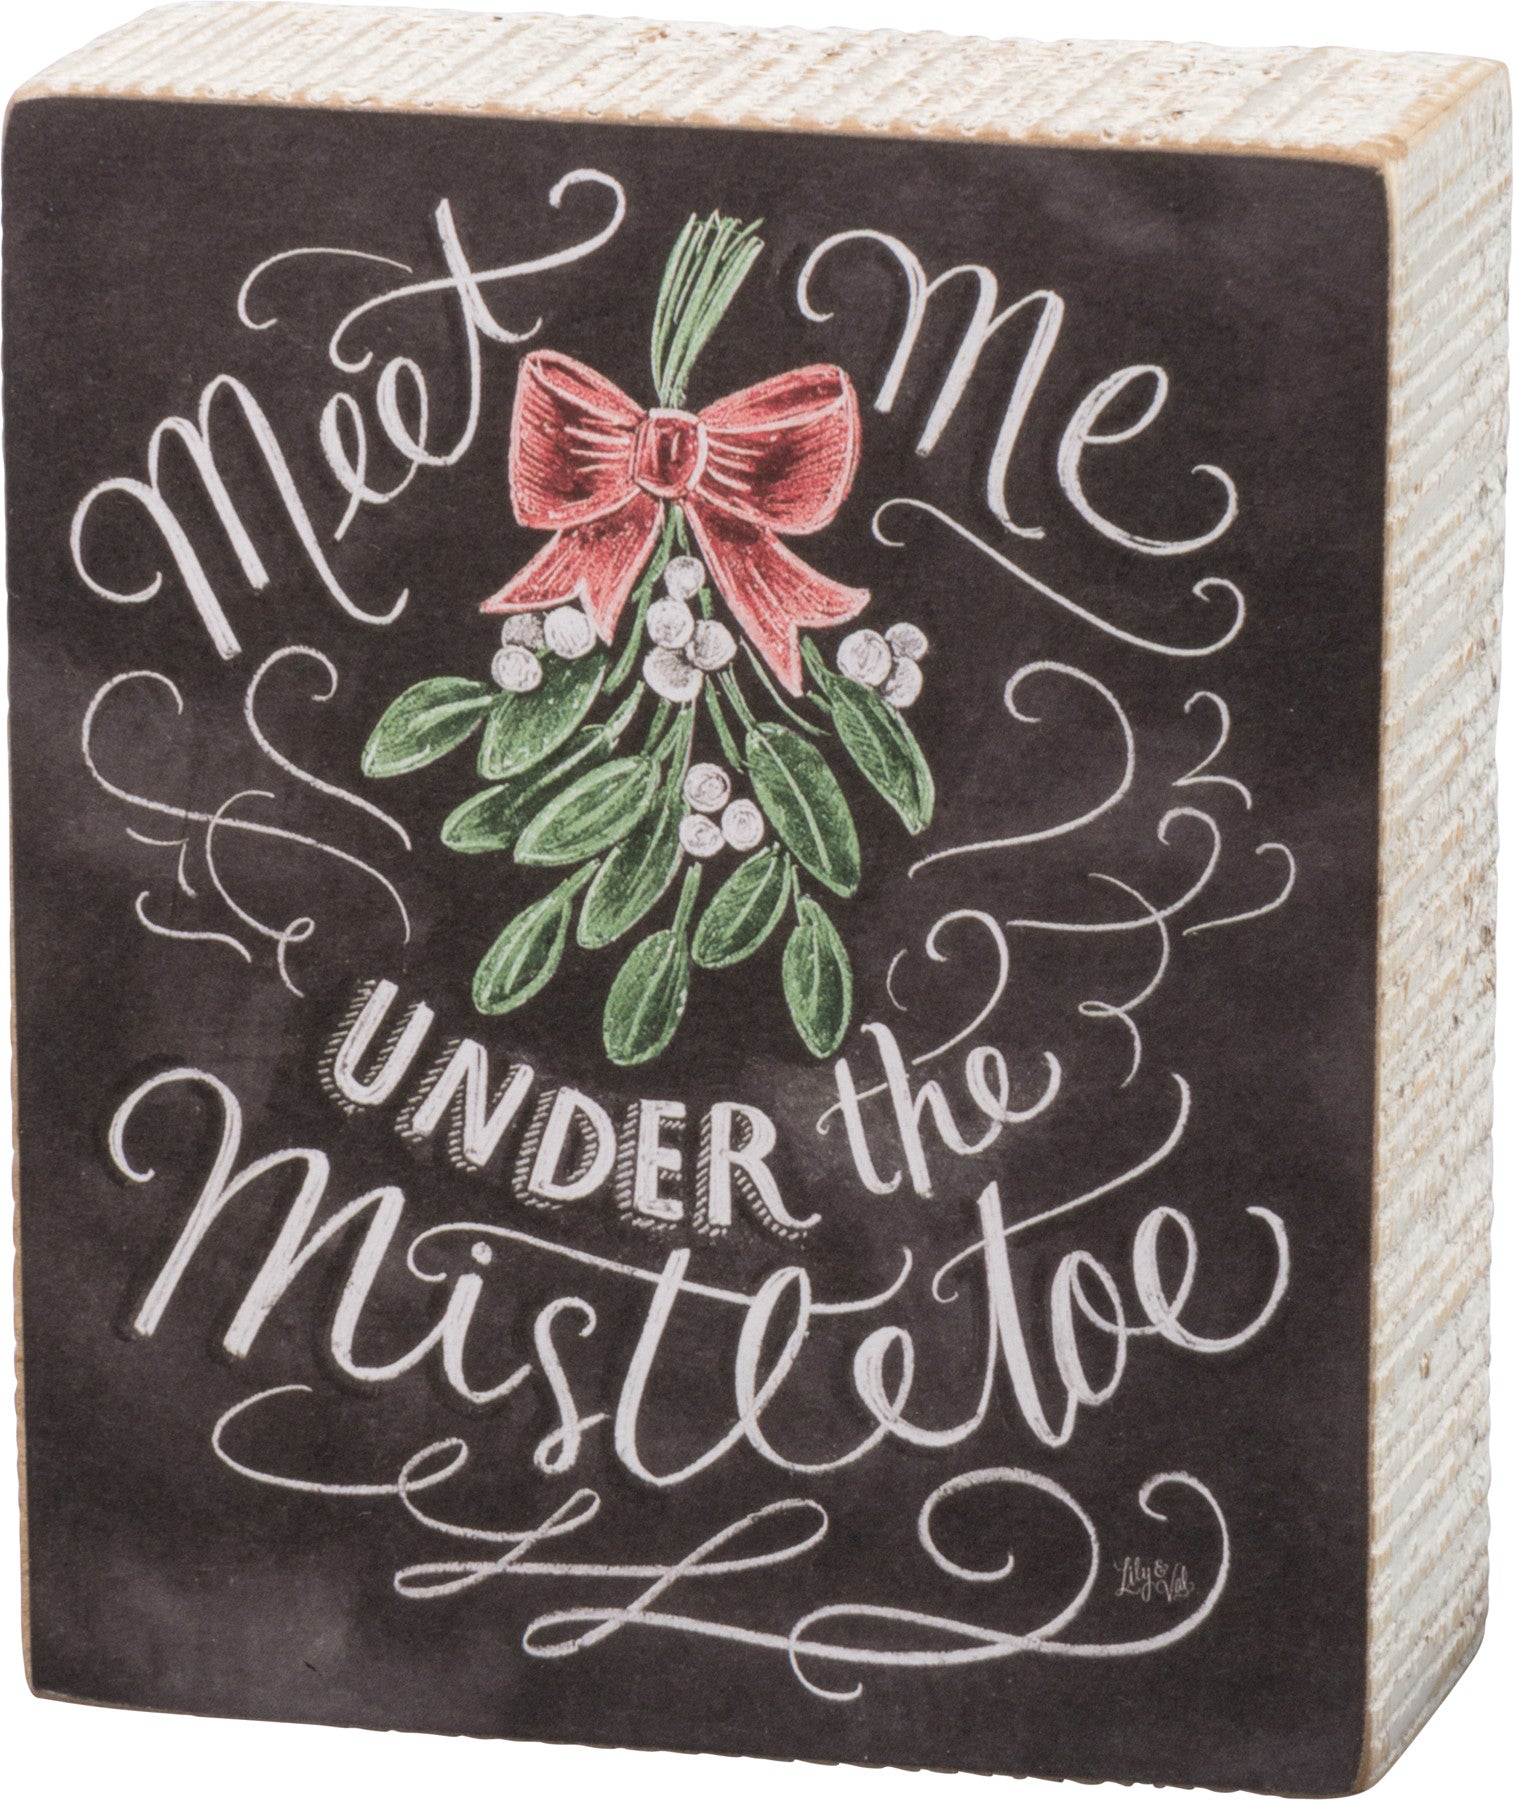 Meet Me Under the Mistletoe Chalk Sign - Christmas Box Sign